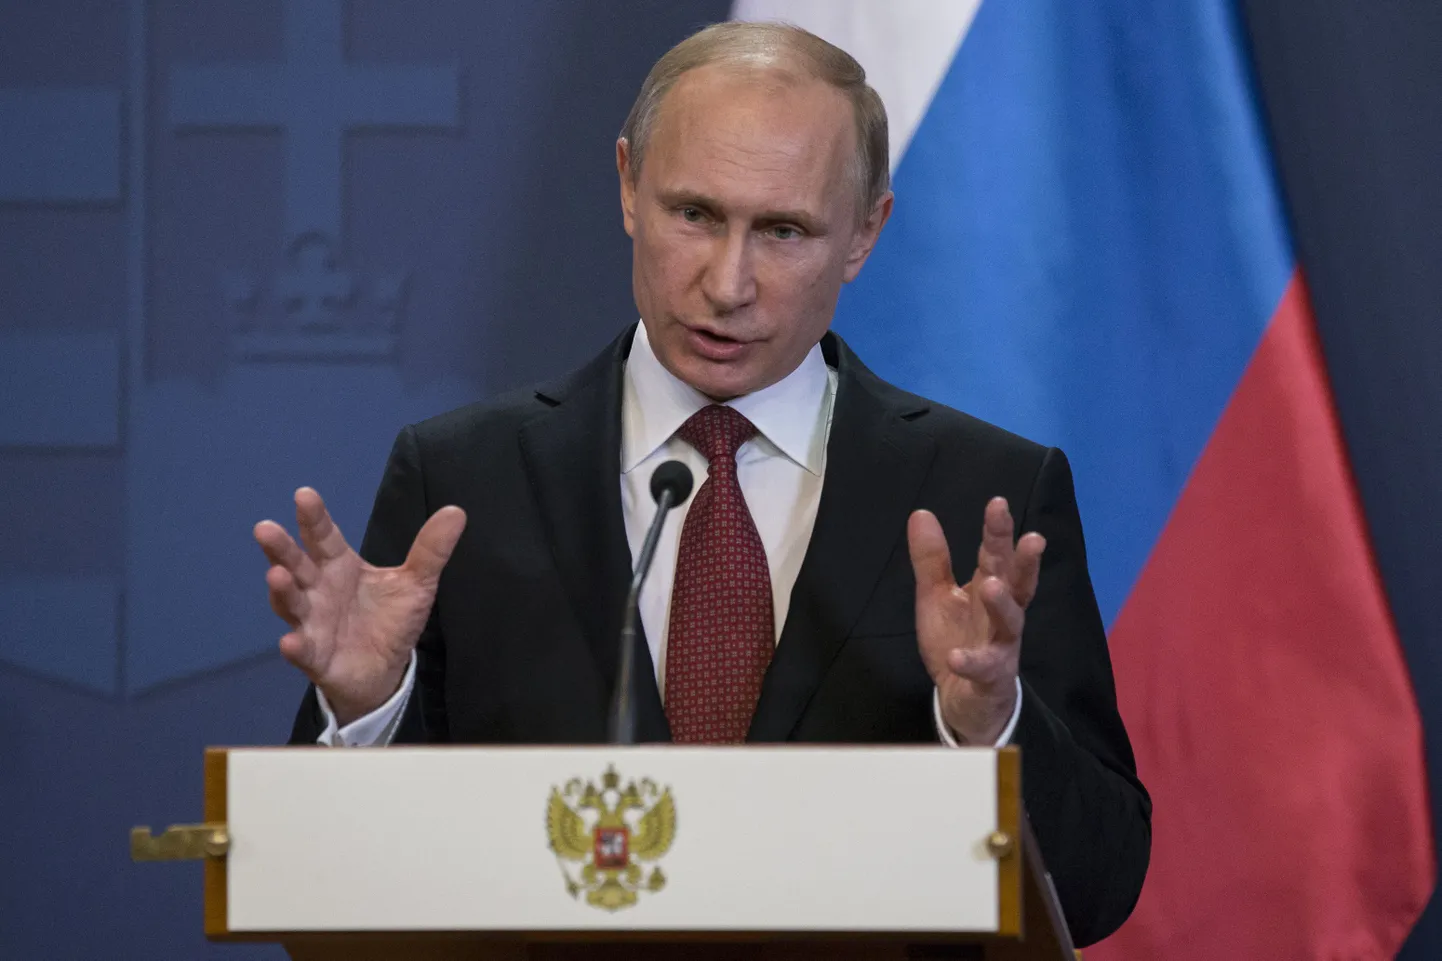 Vene president Vladimir Putin